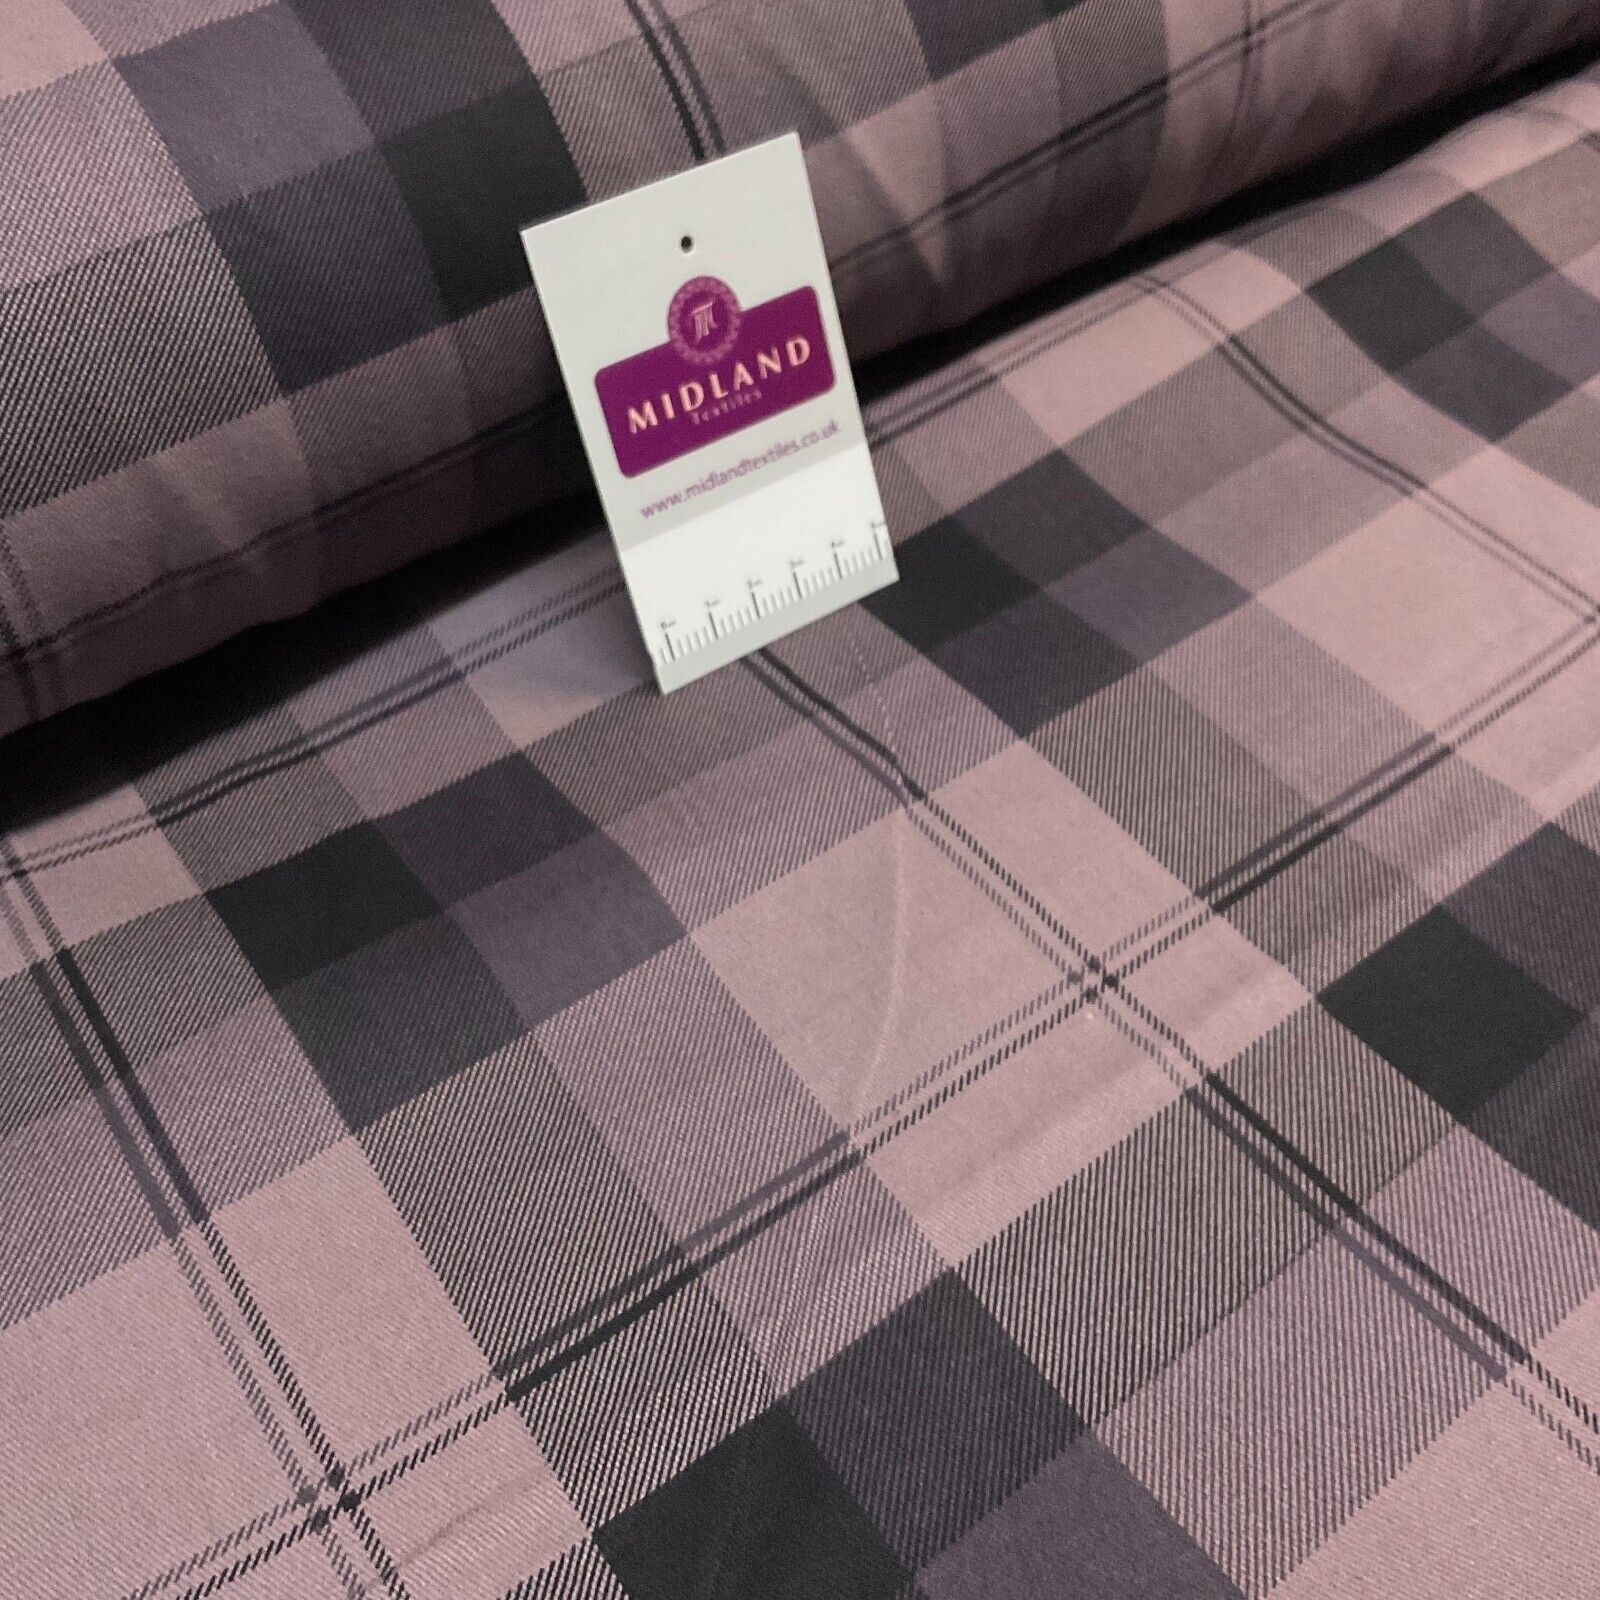 Plaid Scottish tartan Check Cotton Drill upholstery workwear Fabric 150 cm M1718